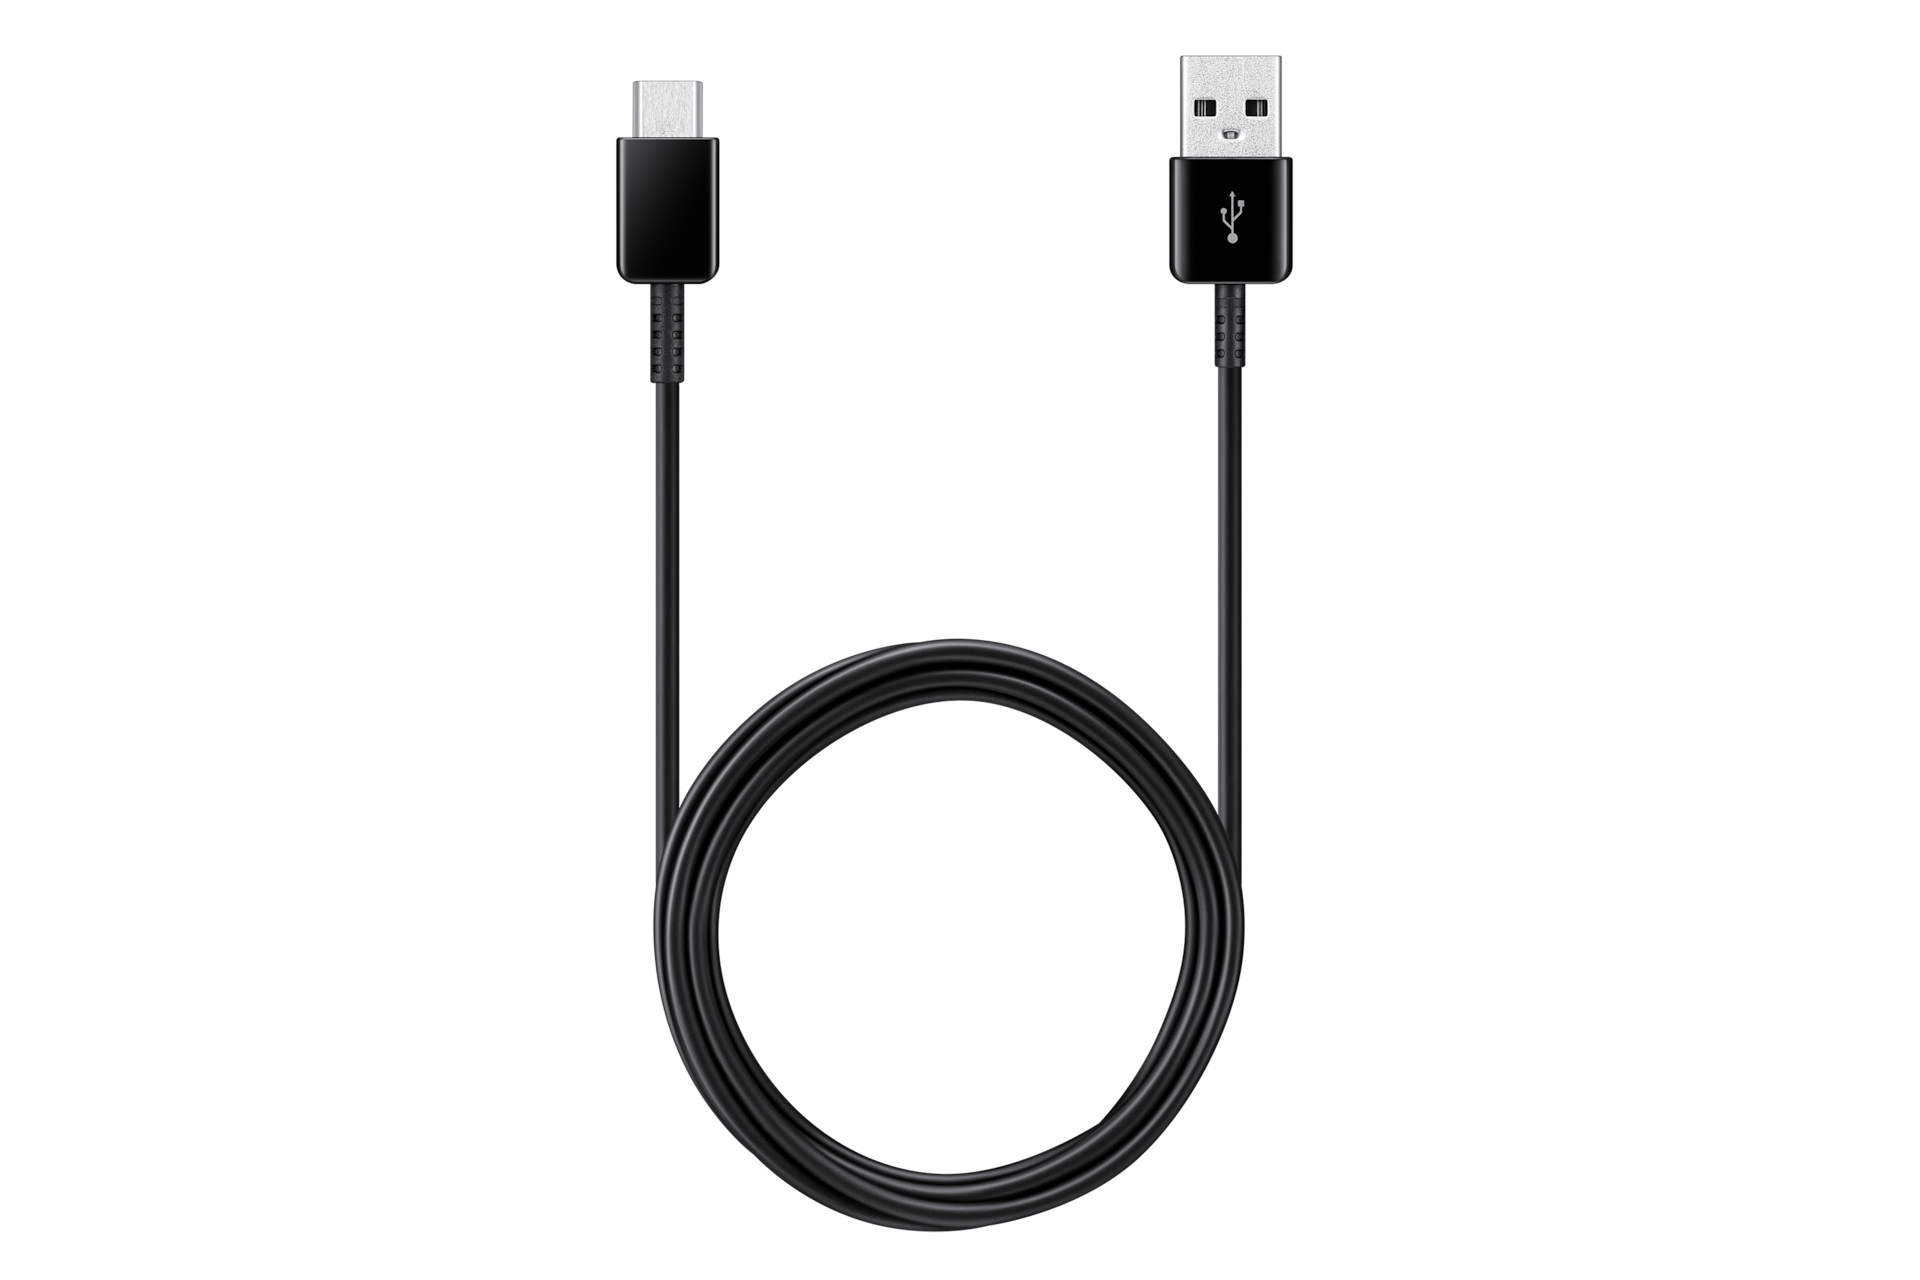 Câble téléphone,Câble Multi USB 6 en 1 câble Multi Charge USB avec